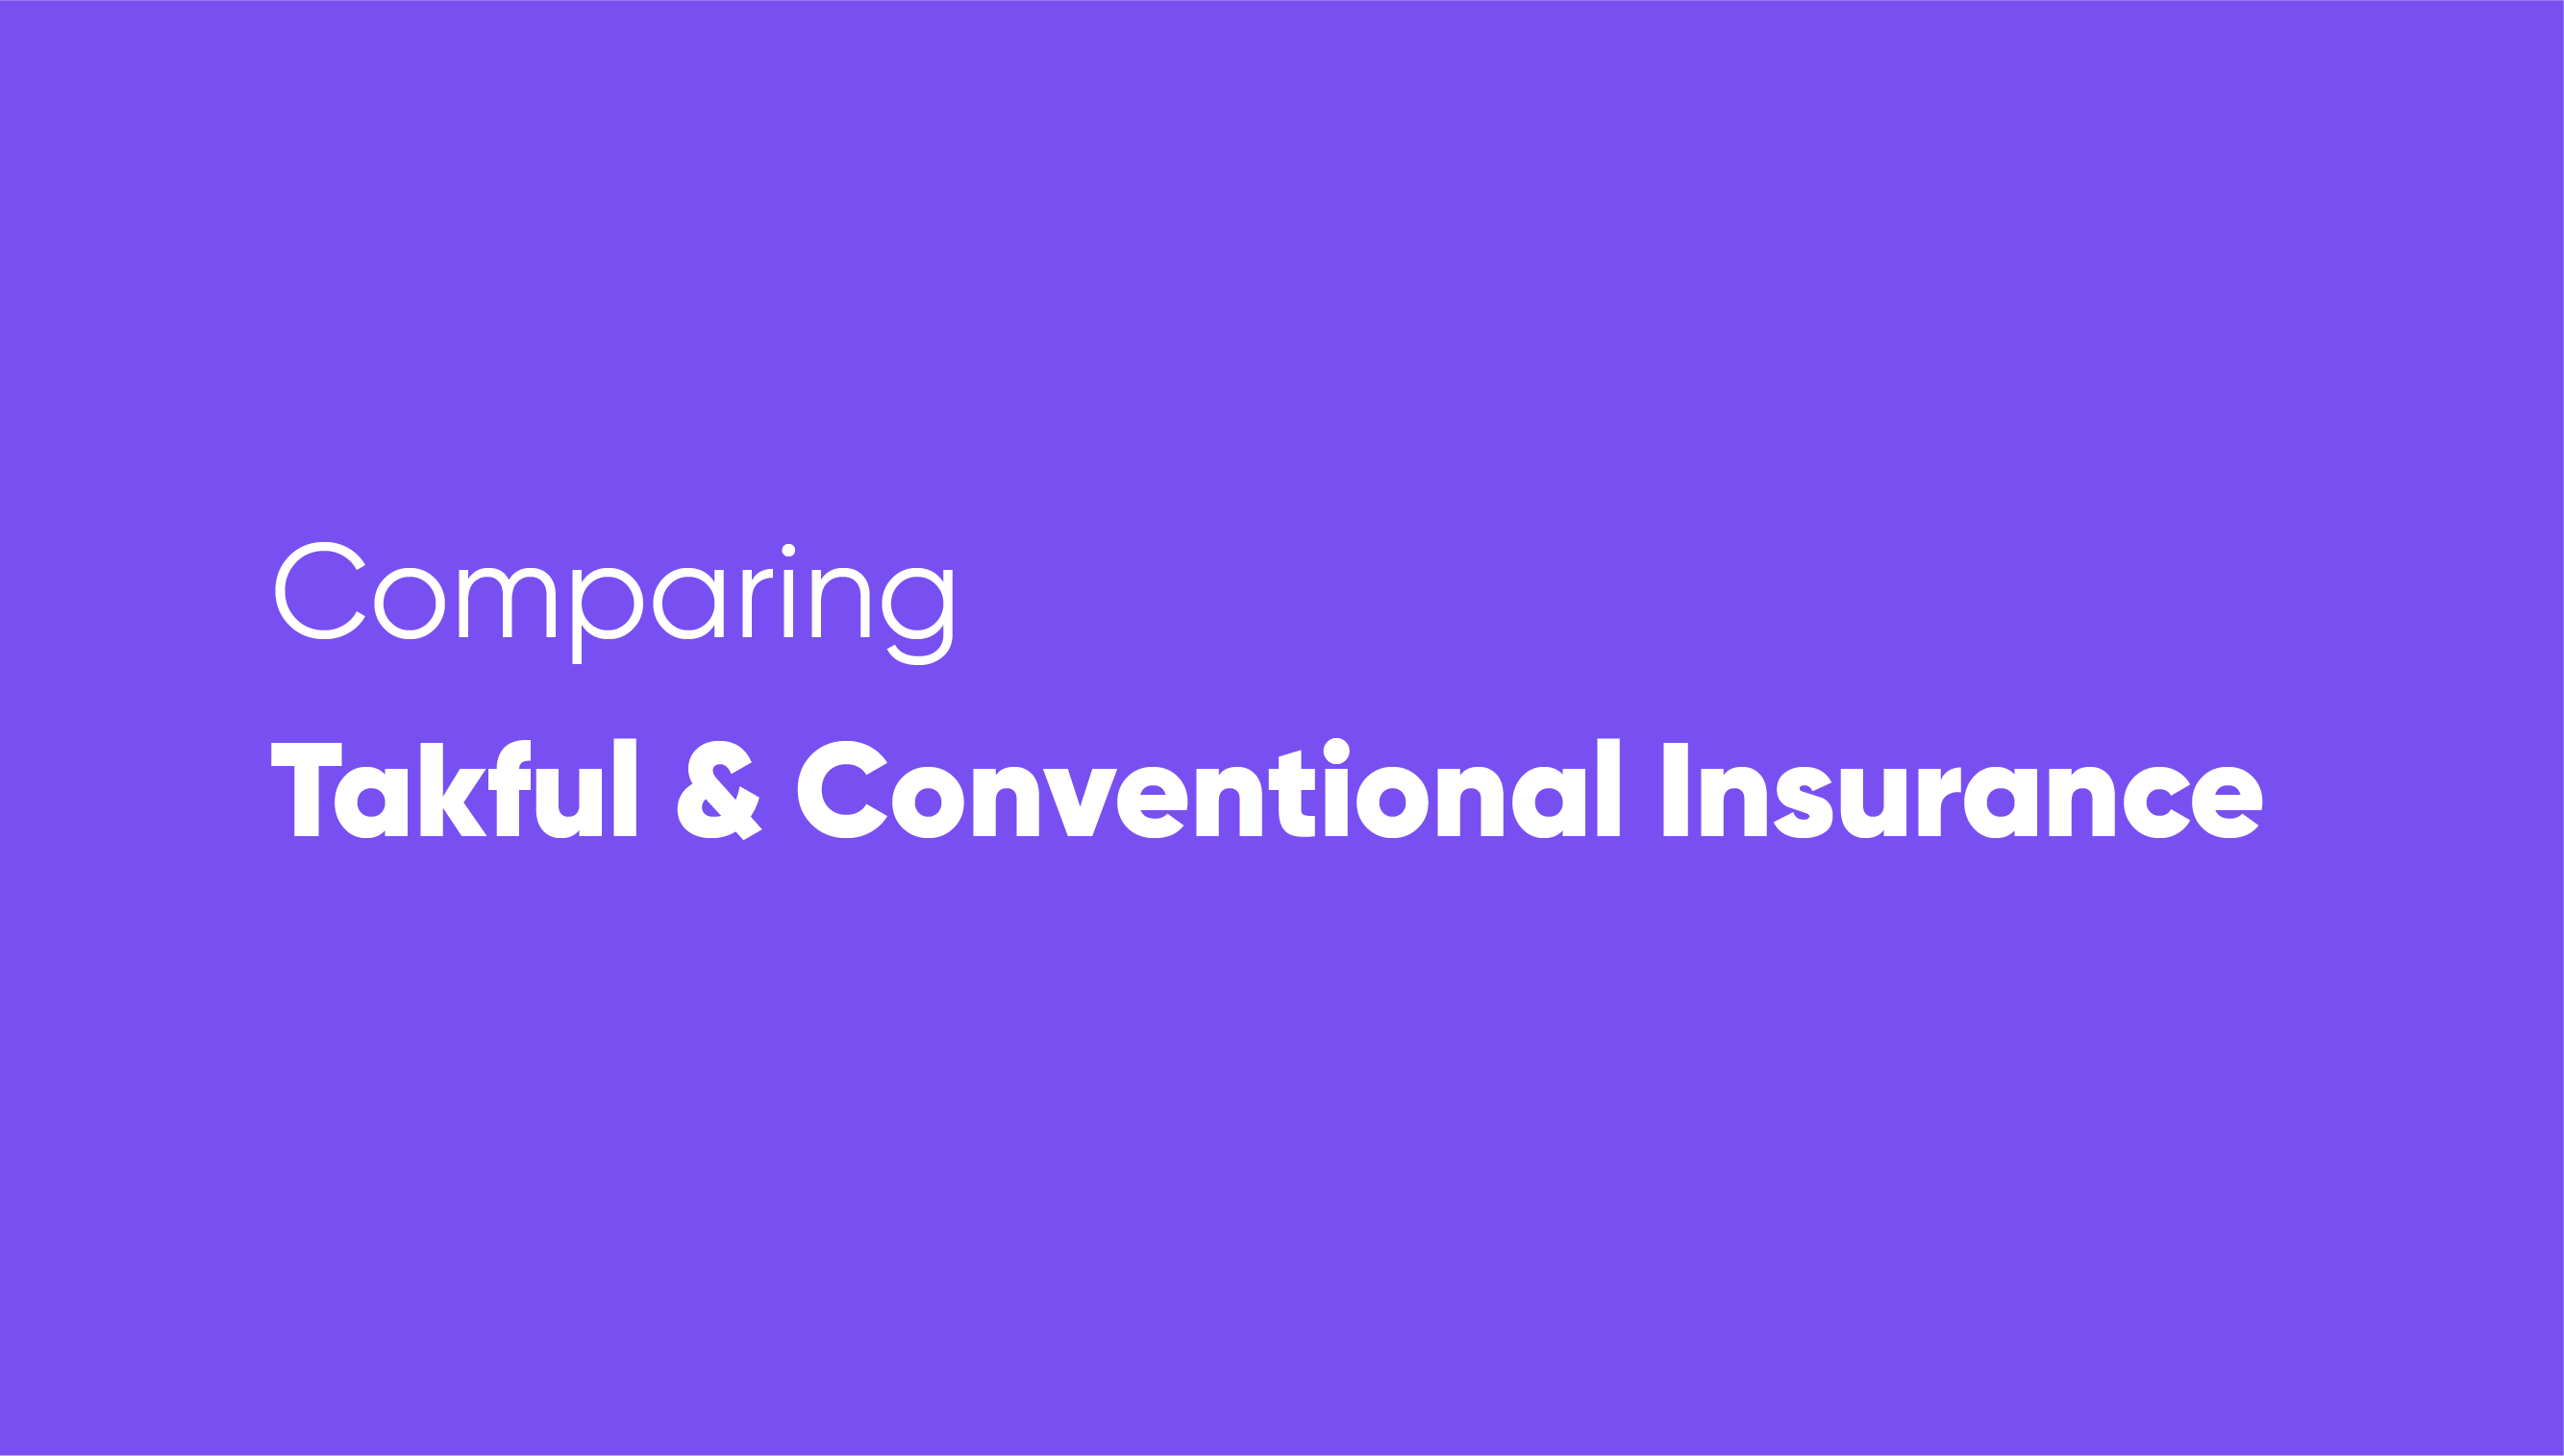 Conventional Insurance vs Takaful "Islamic Insurance"